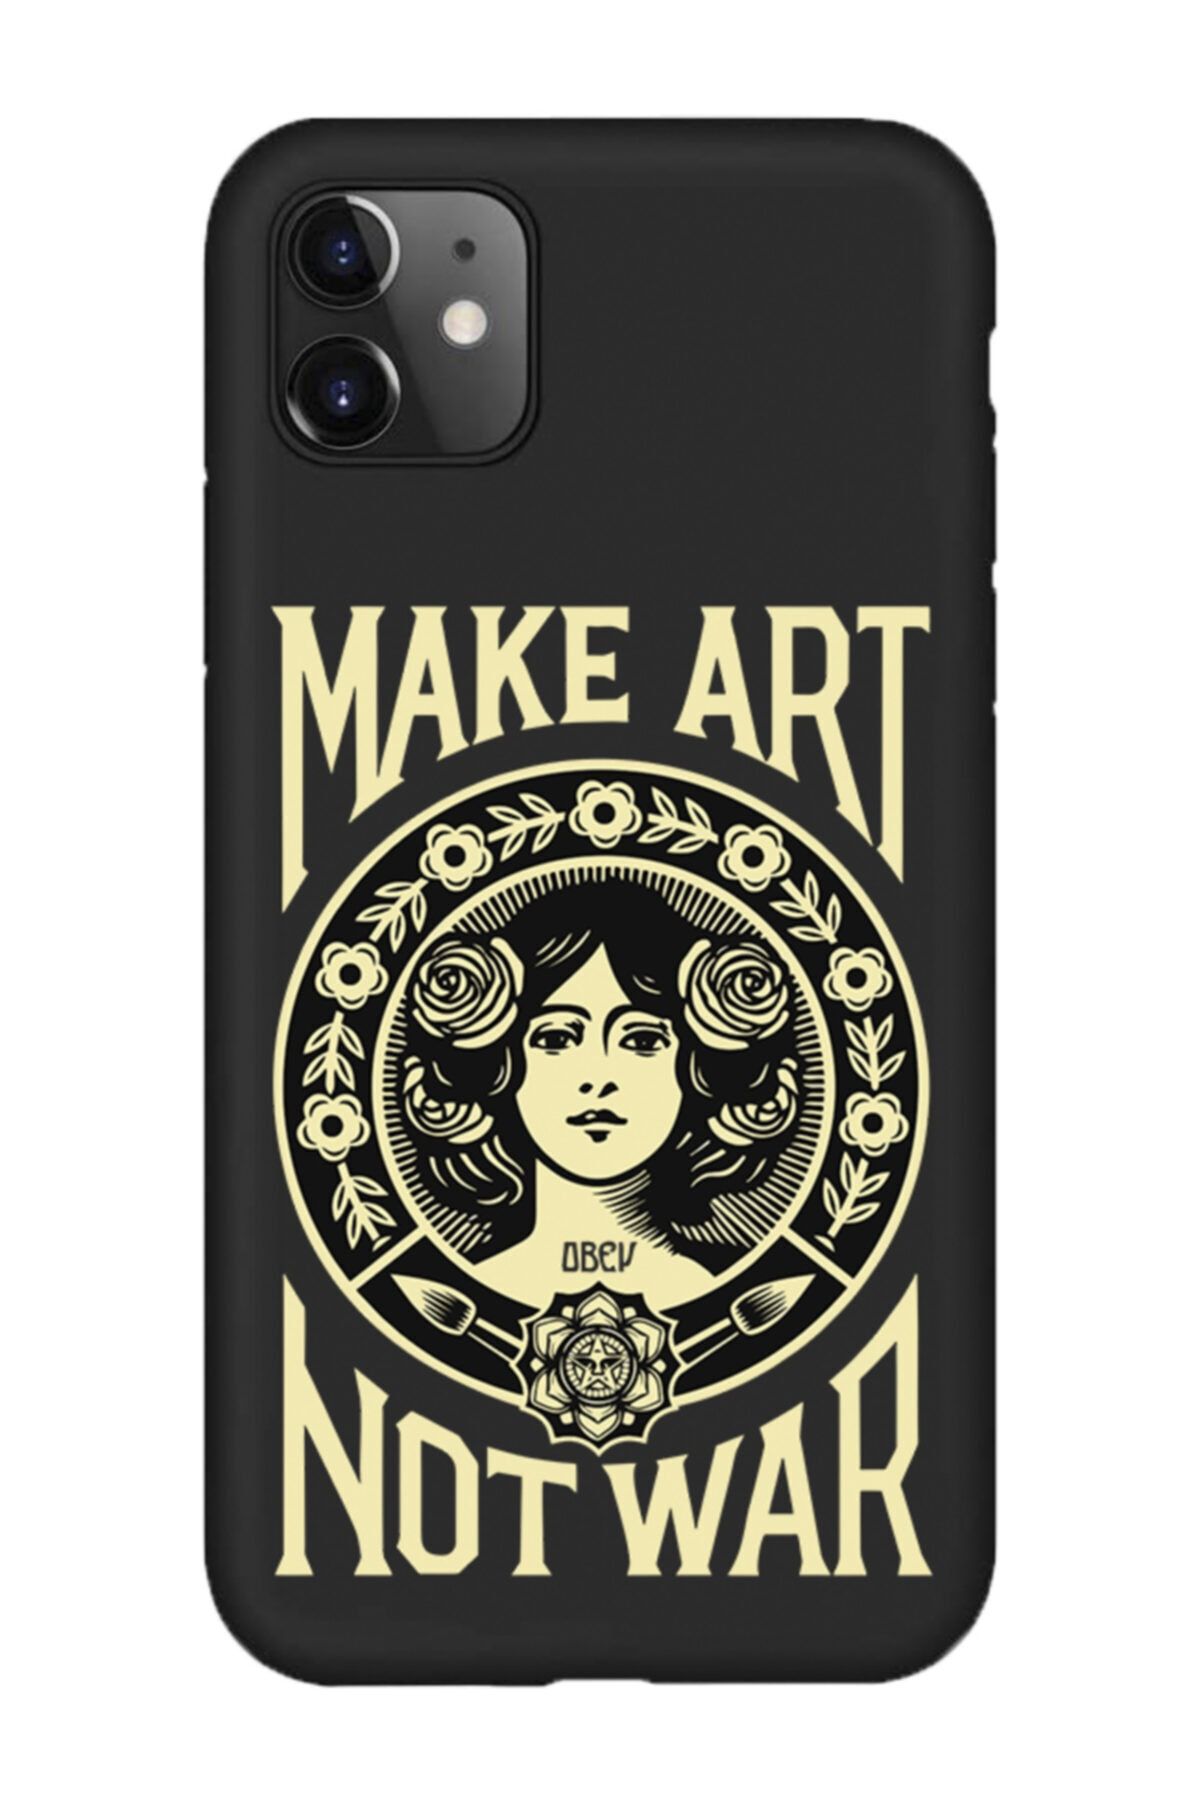 shoptocase Iphone 11 Make Art Not War Telefon Kılıfı